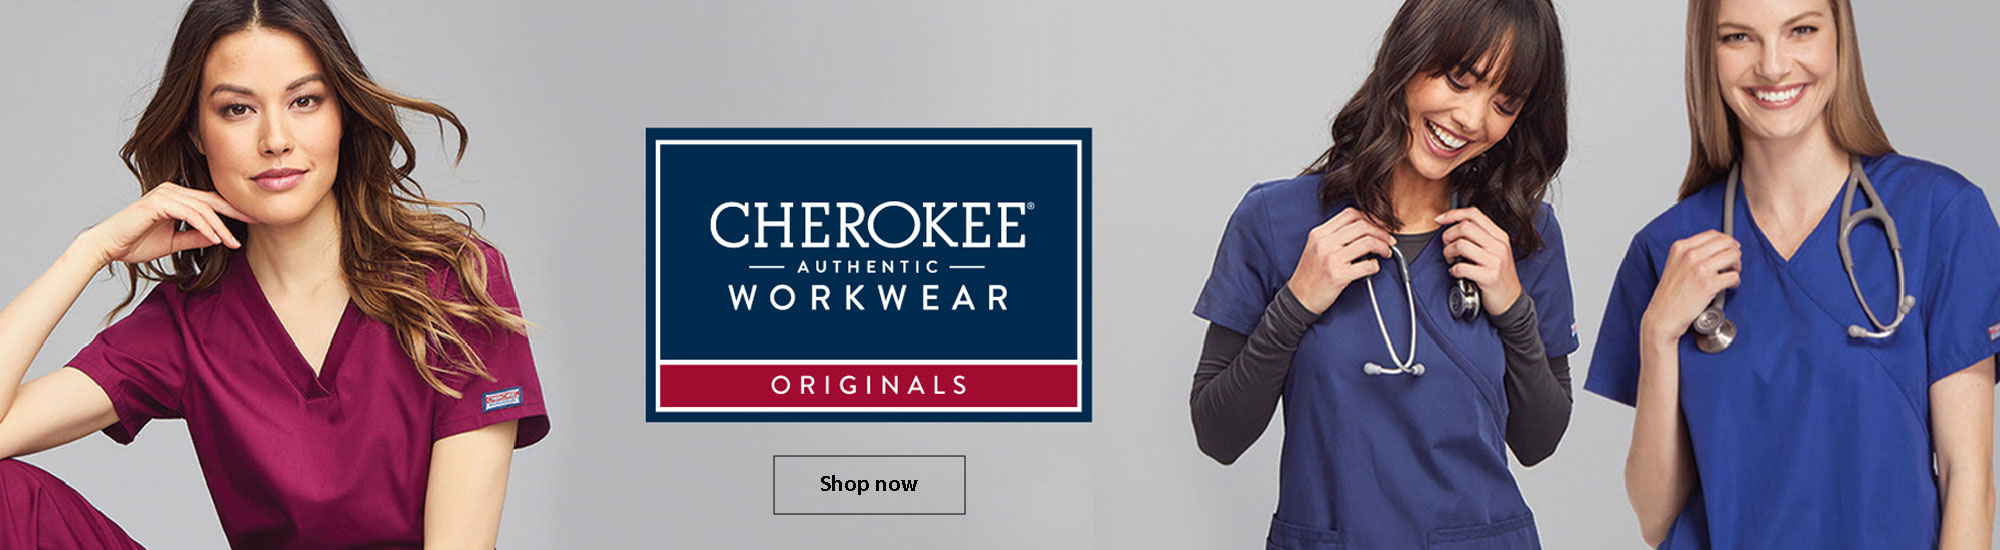 cherokee-workwear